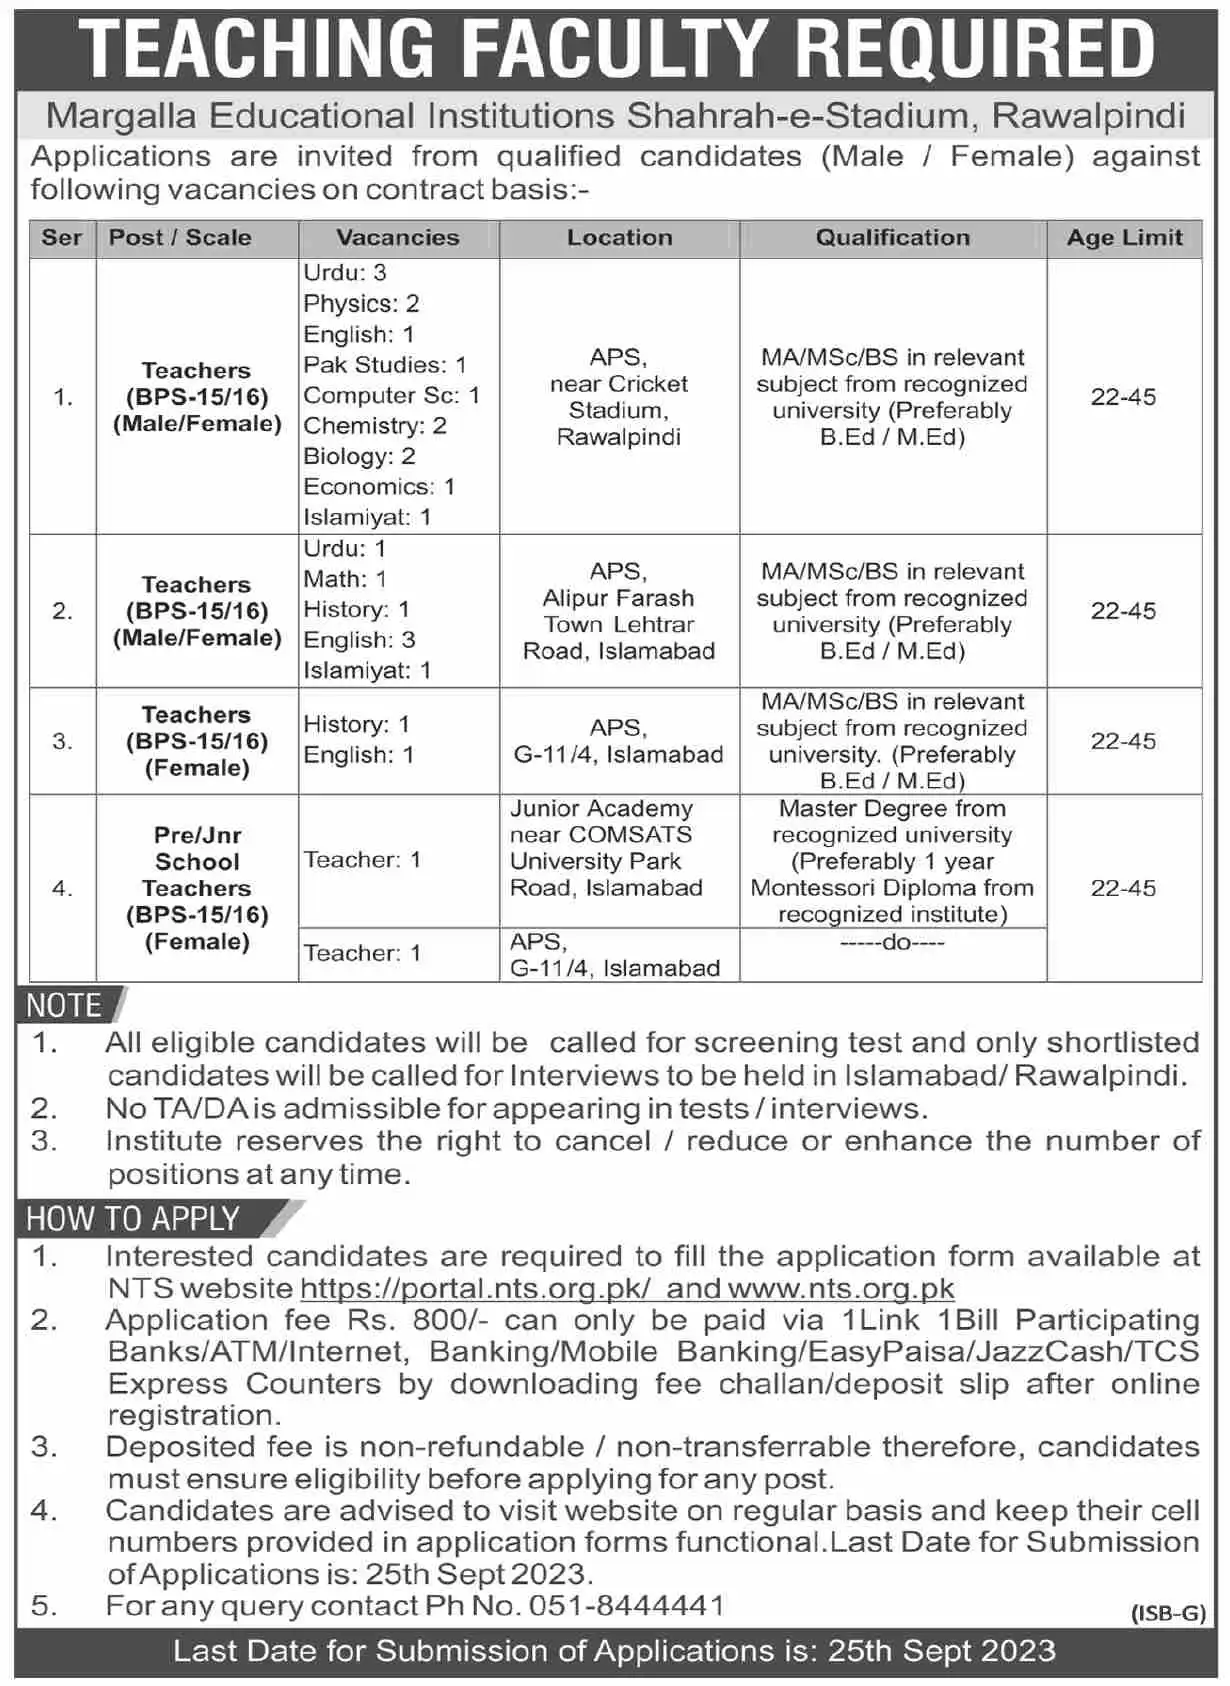 Margalla Educational Institutions Islamabad New Jobs 2023